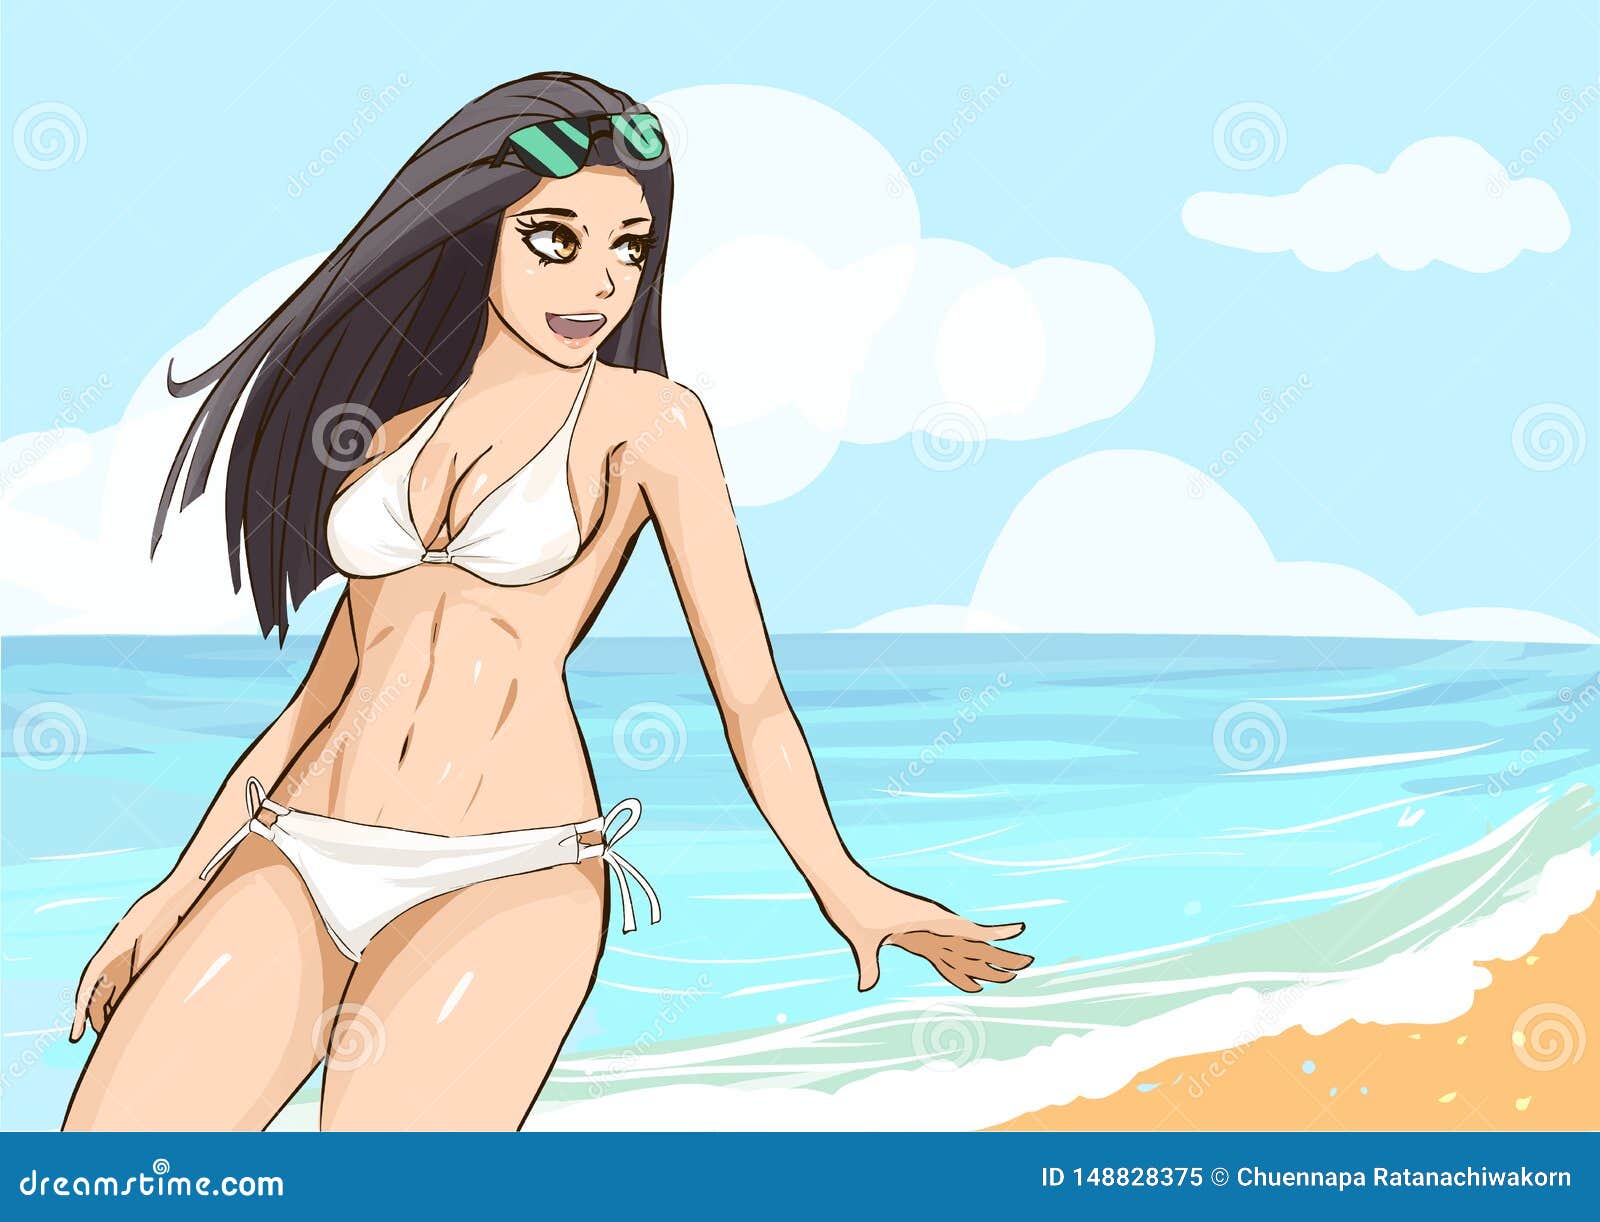 Bikini Girl Cartoon Anime on Beach Stock Vector - Illustration of relaxing,  holiday: 148828375